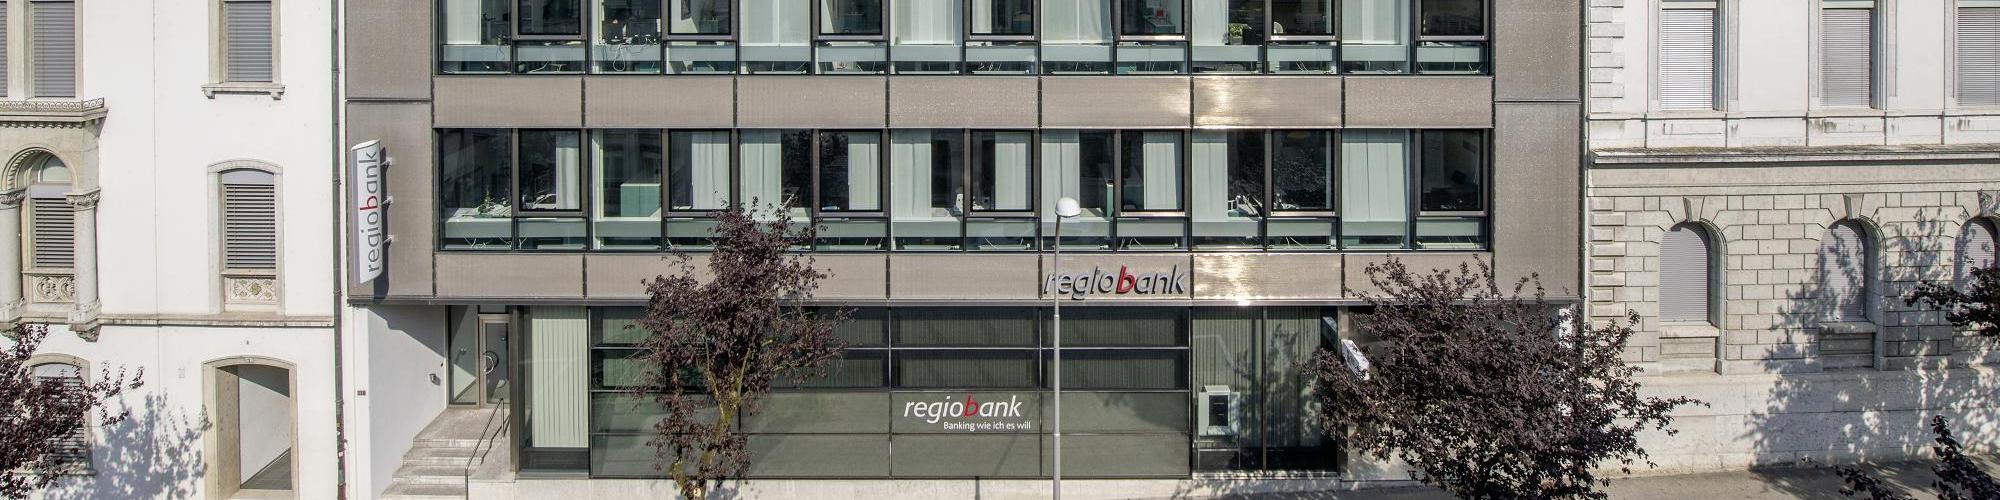 Regiobank Solothurn